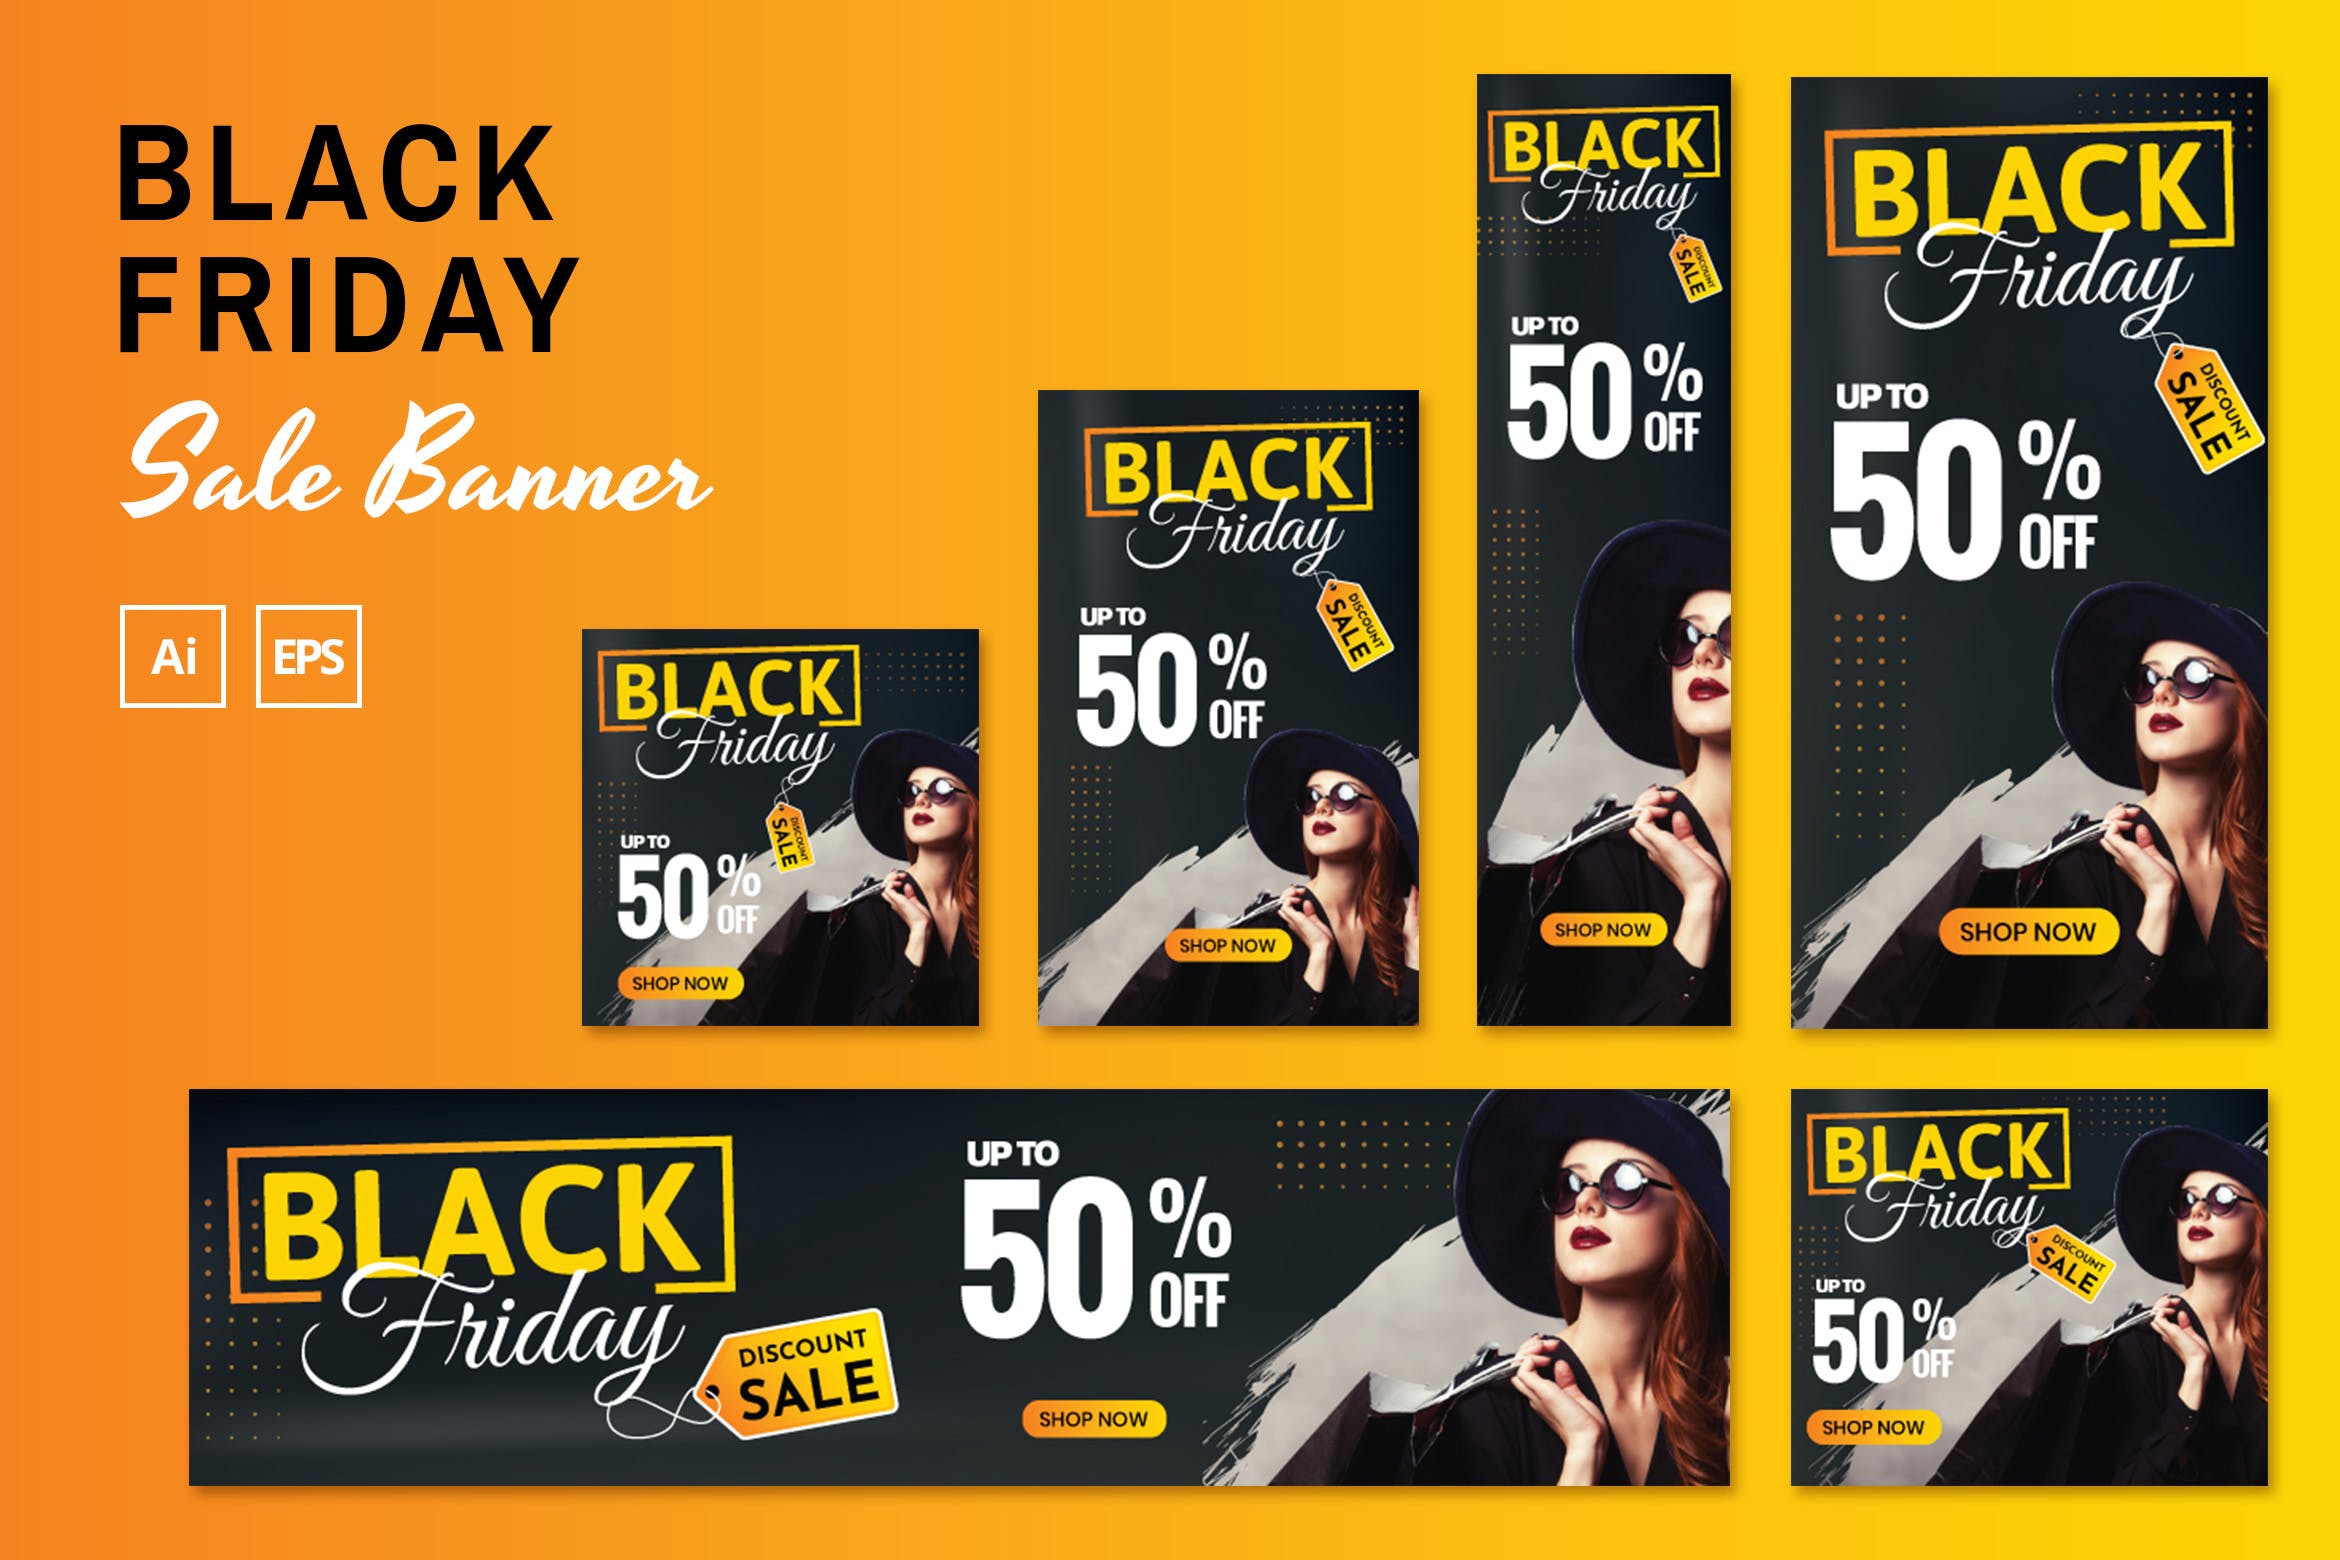 黑色星期五购物主题促销广告Banner图设计模板 Black Friday Sale Banners插图